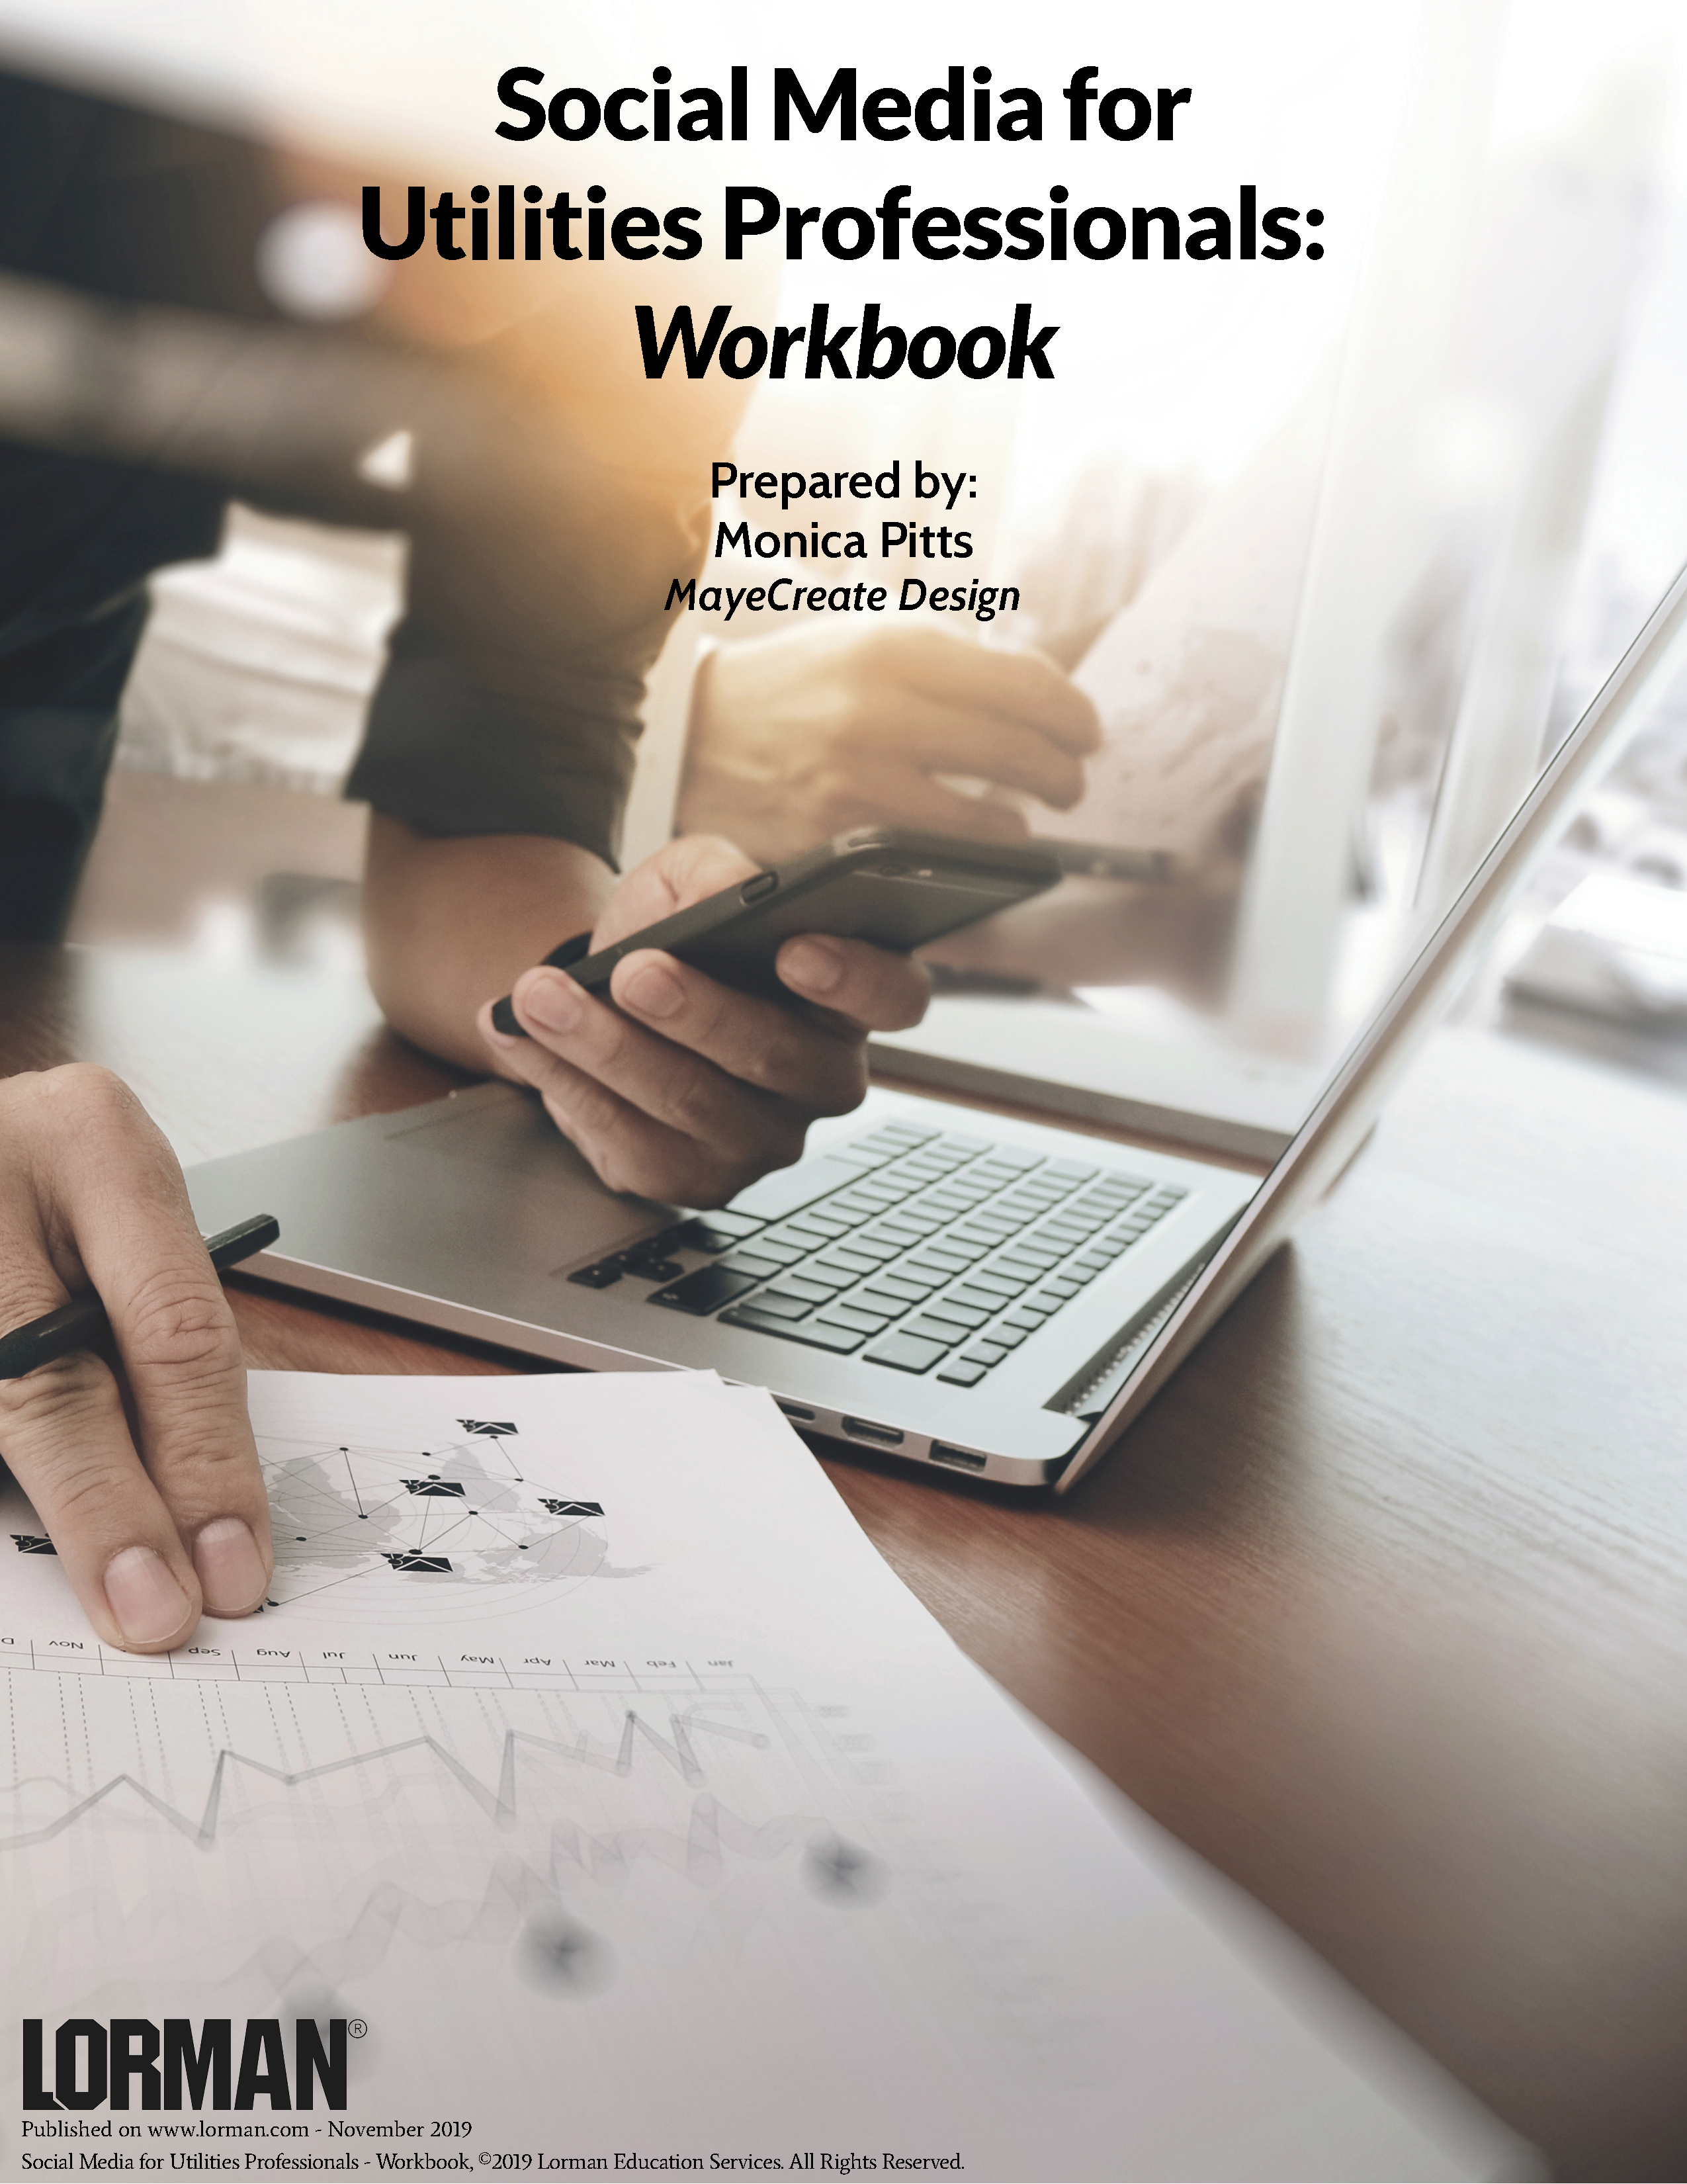 Social Media for Utilities Professionals: Workbook